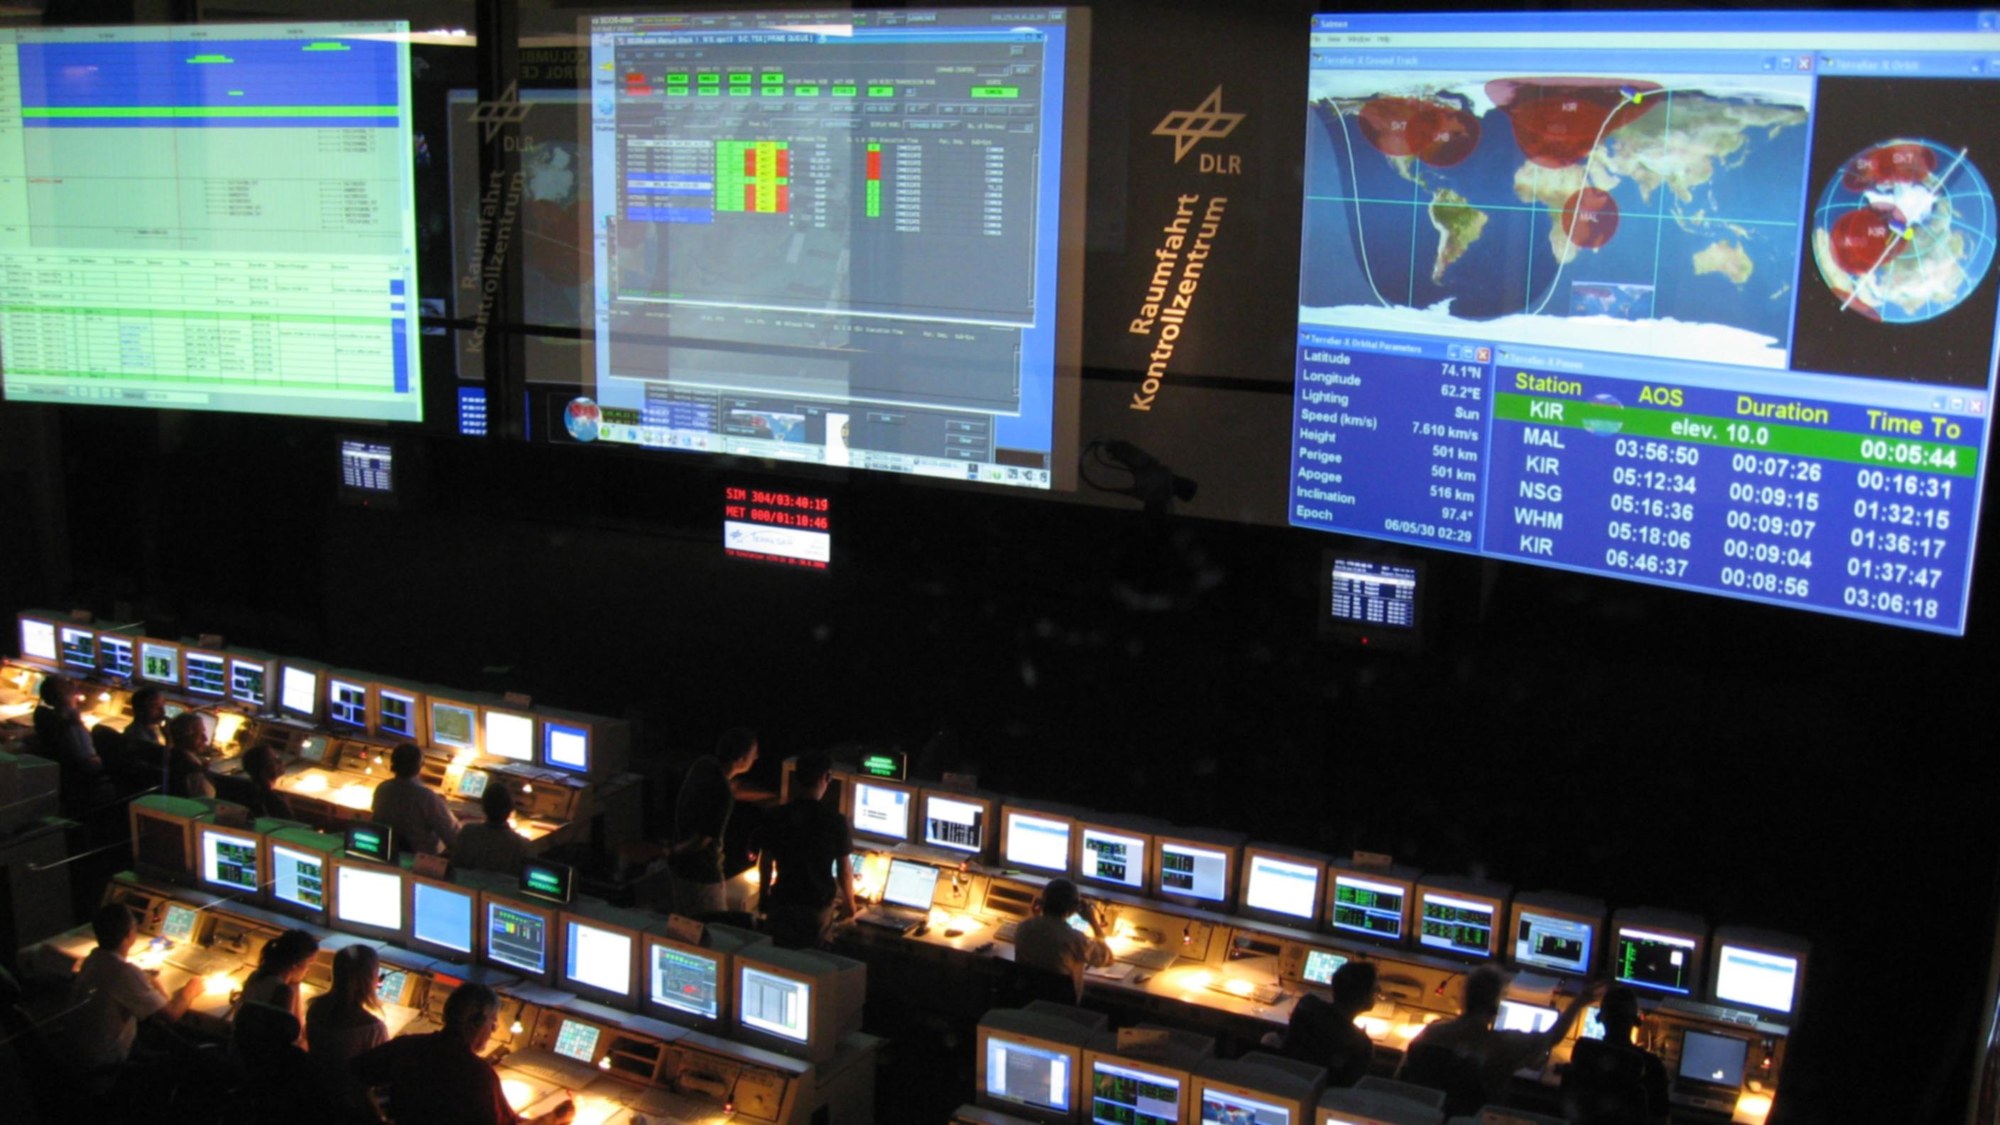 EDRS control room at GSOC